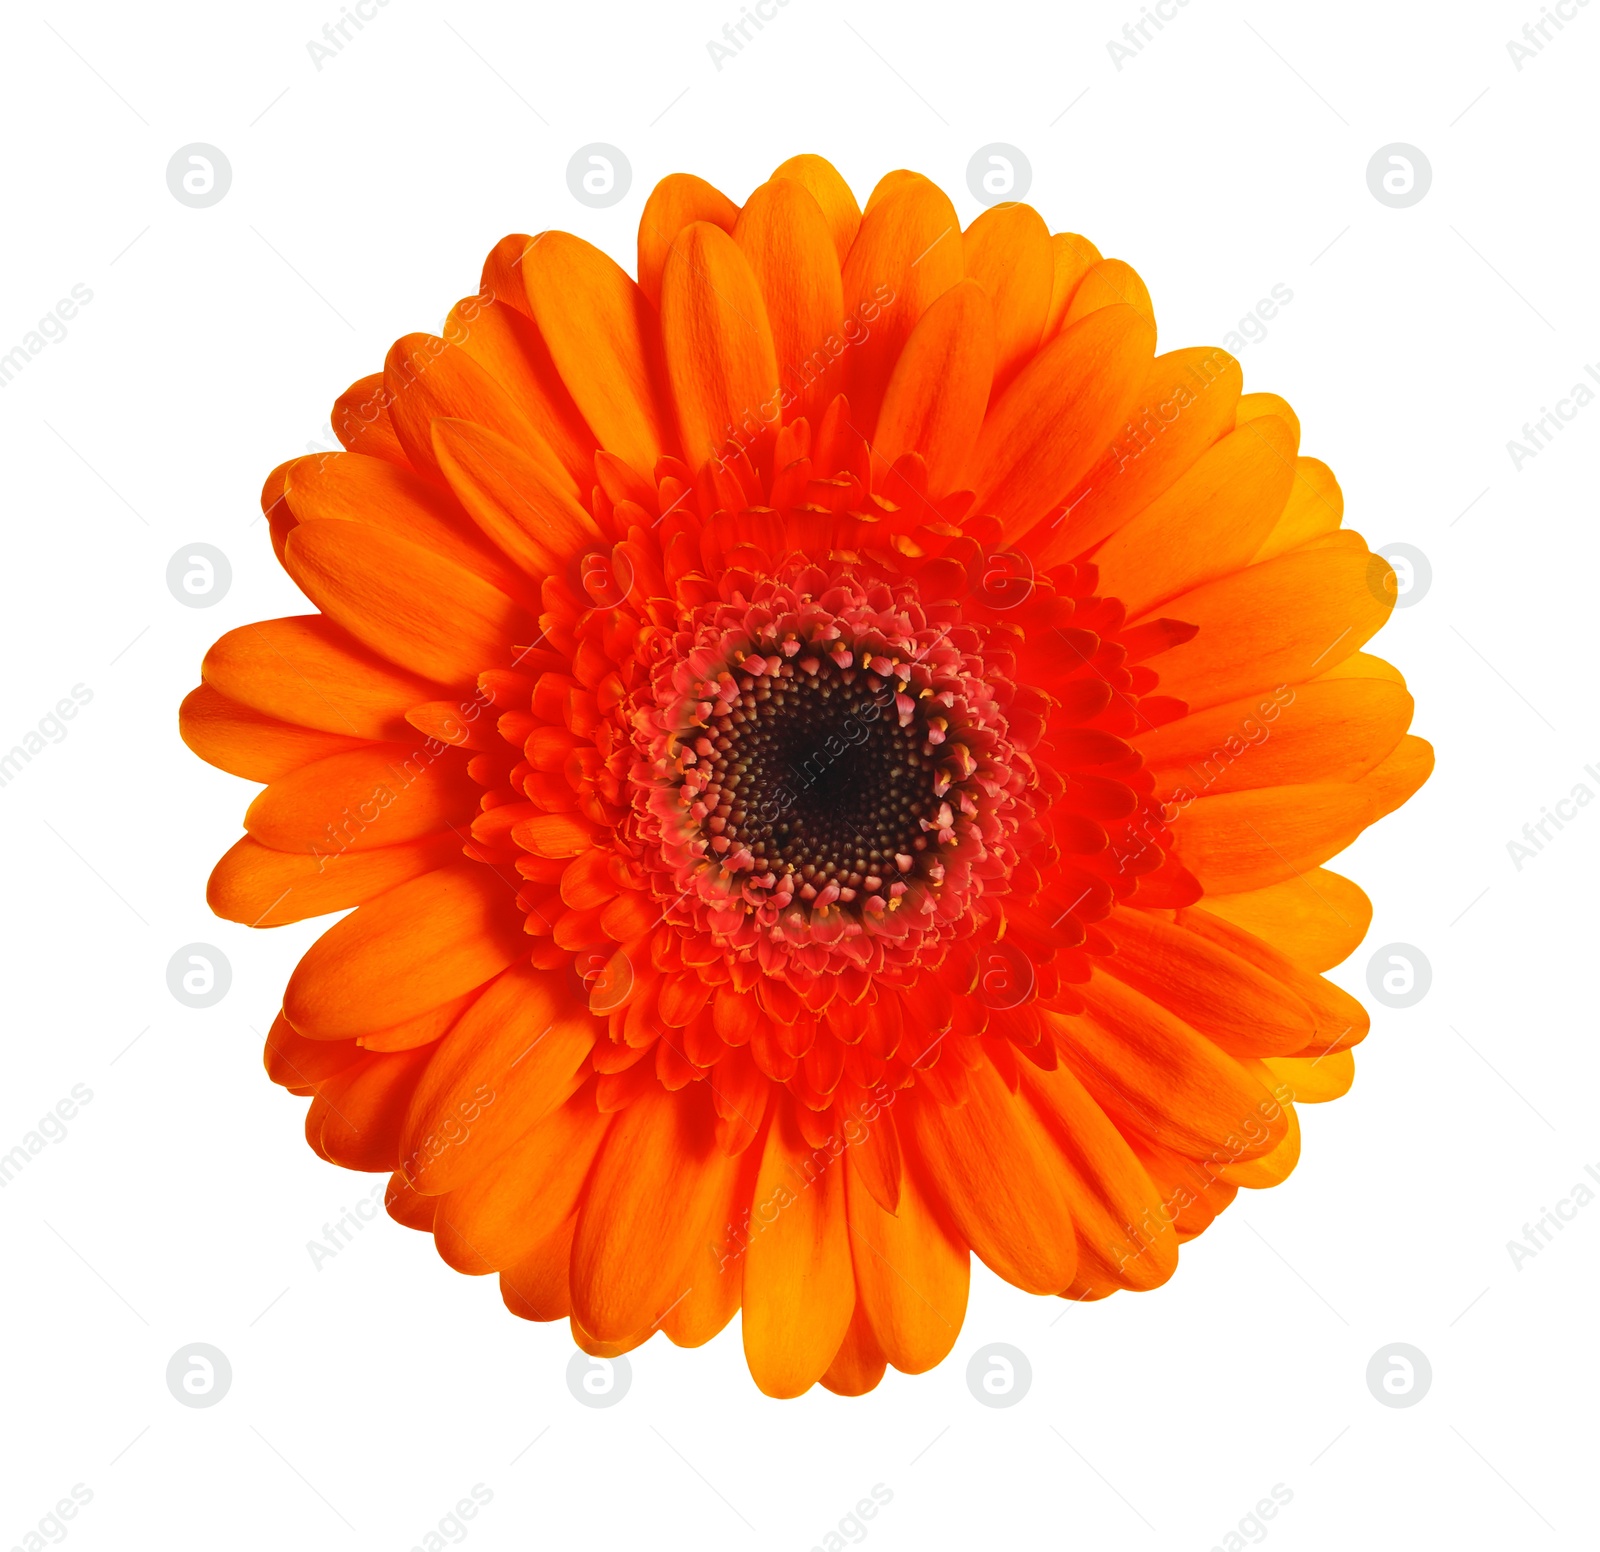 Image of Beautiful orange gerbera flower isolated on white